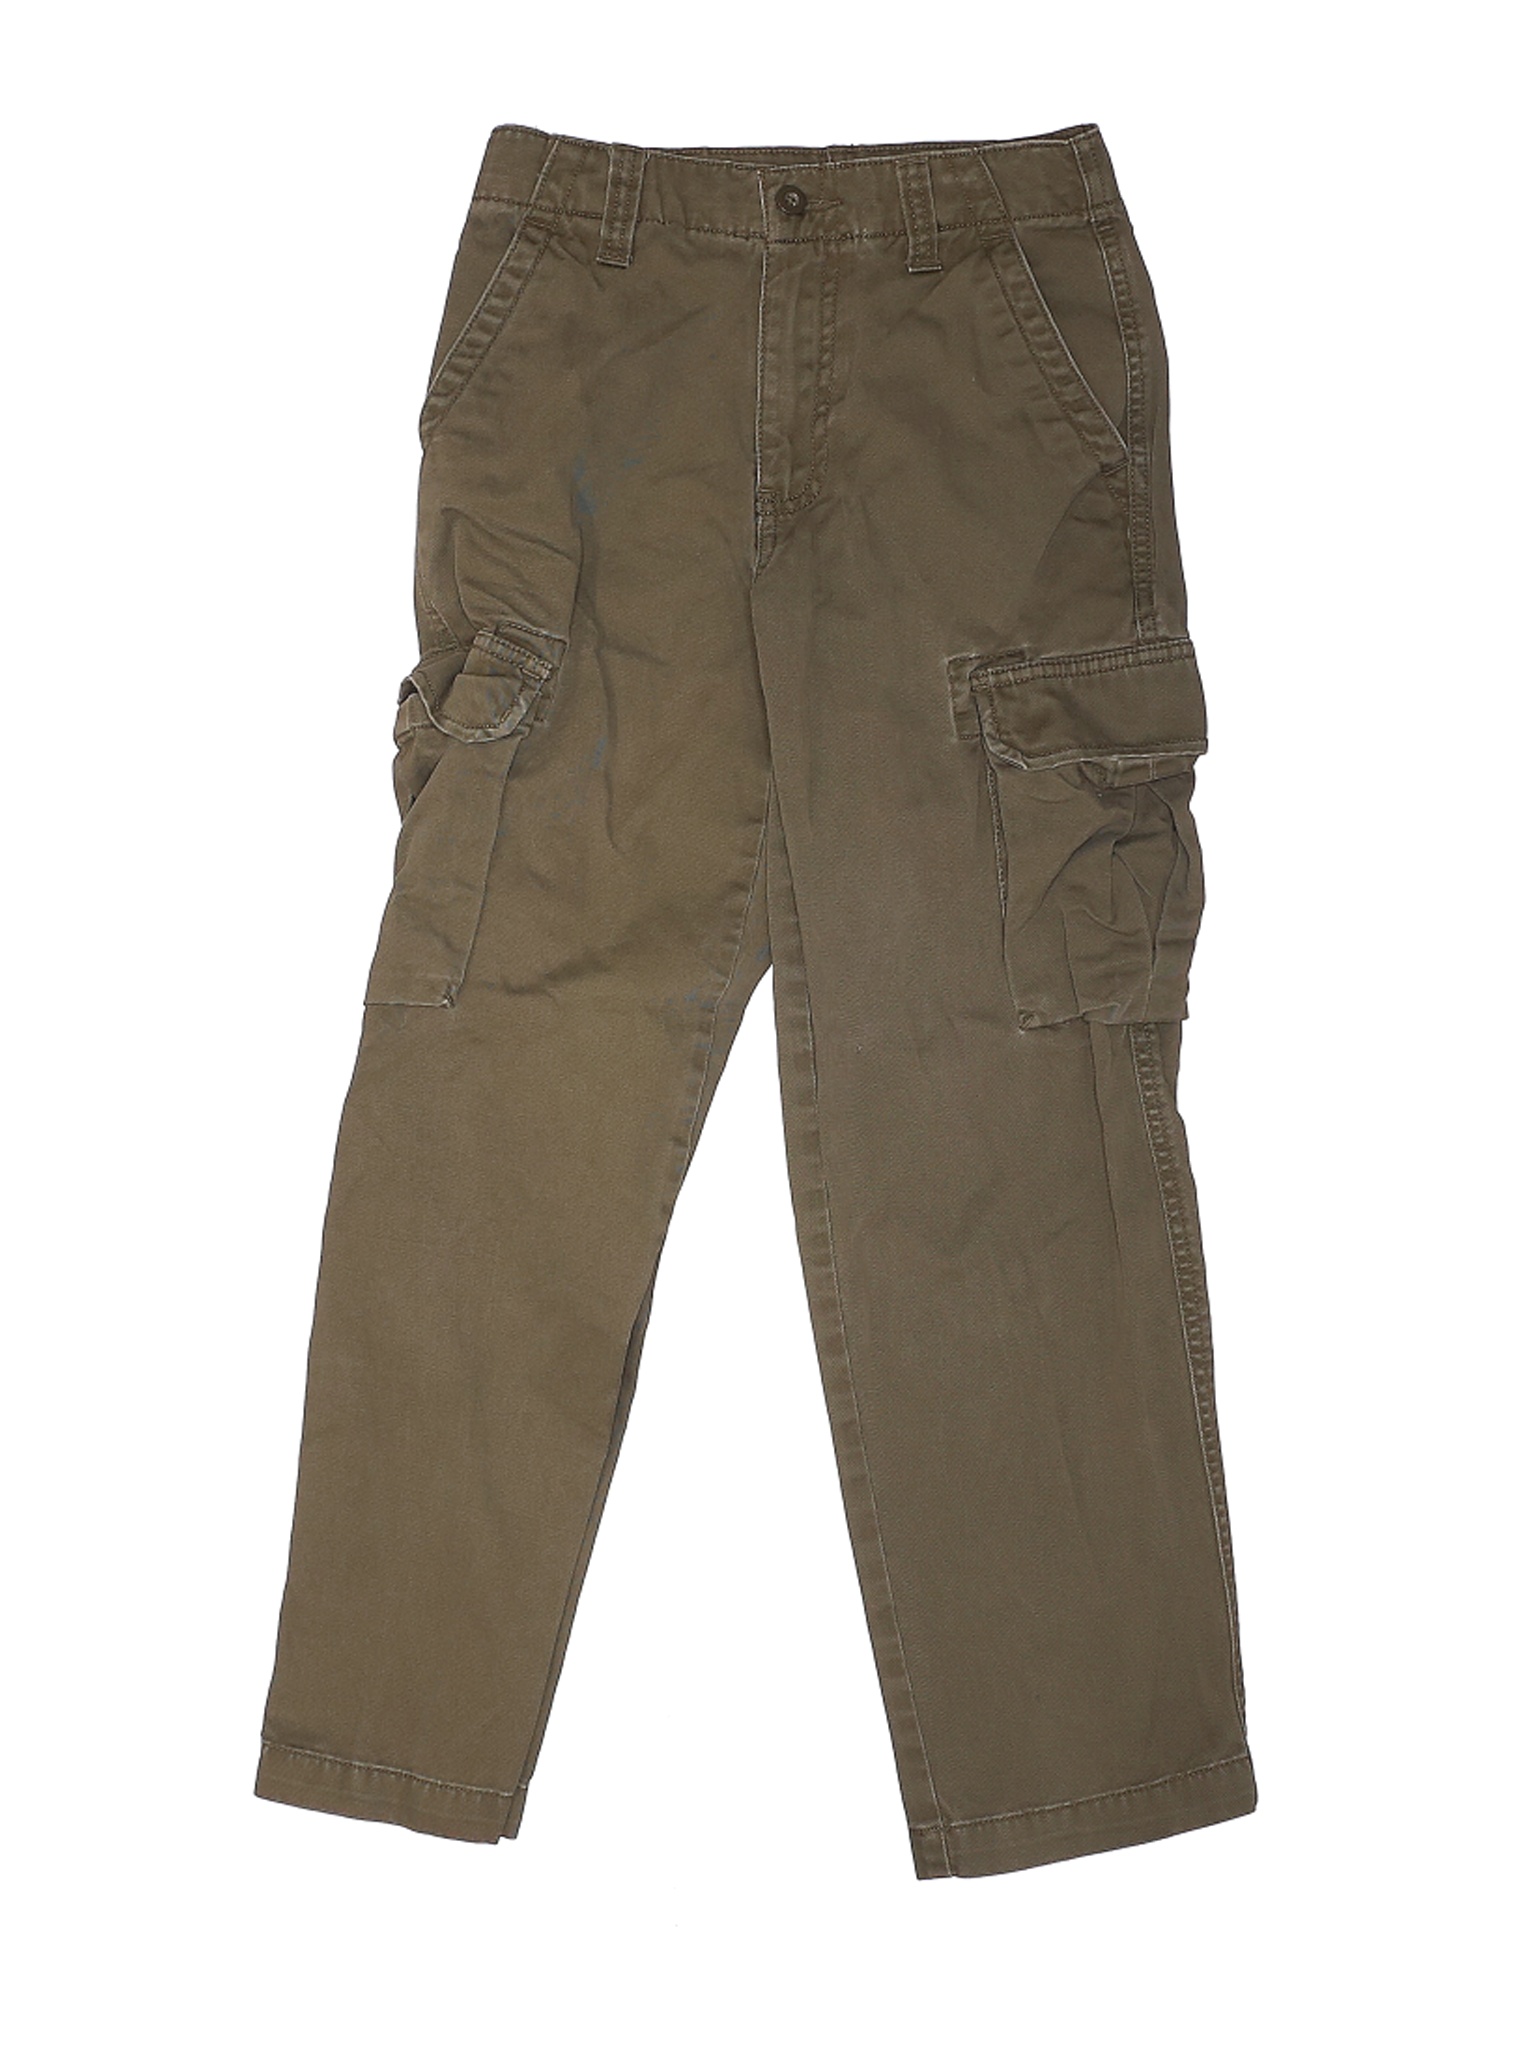 Lands' End Boys Green Cargo Pants 10 | eBay